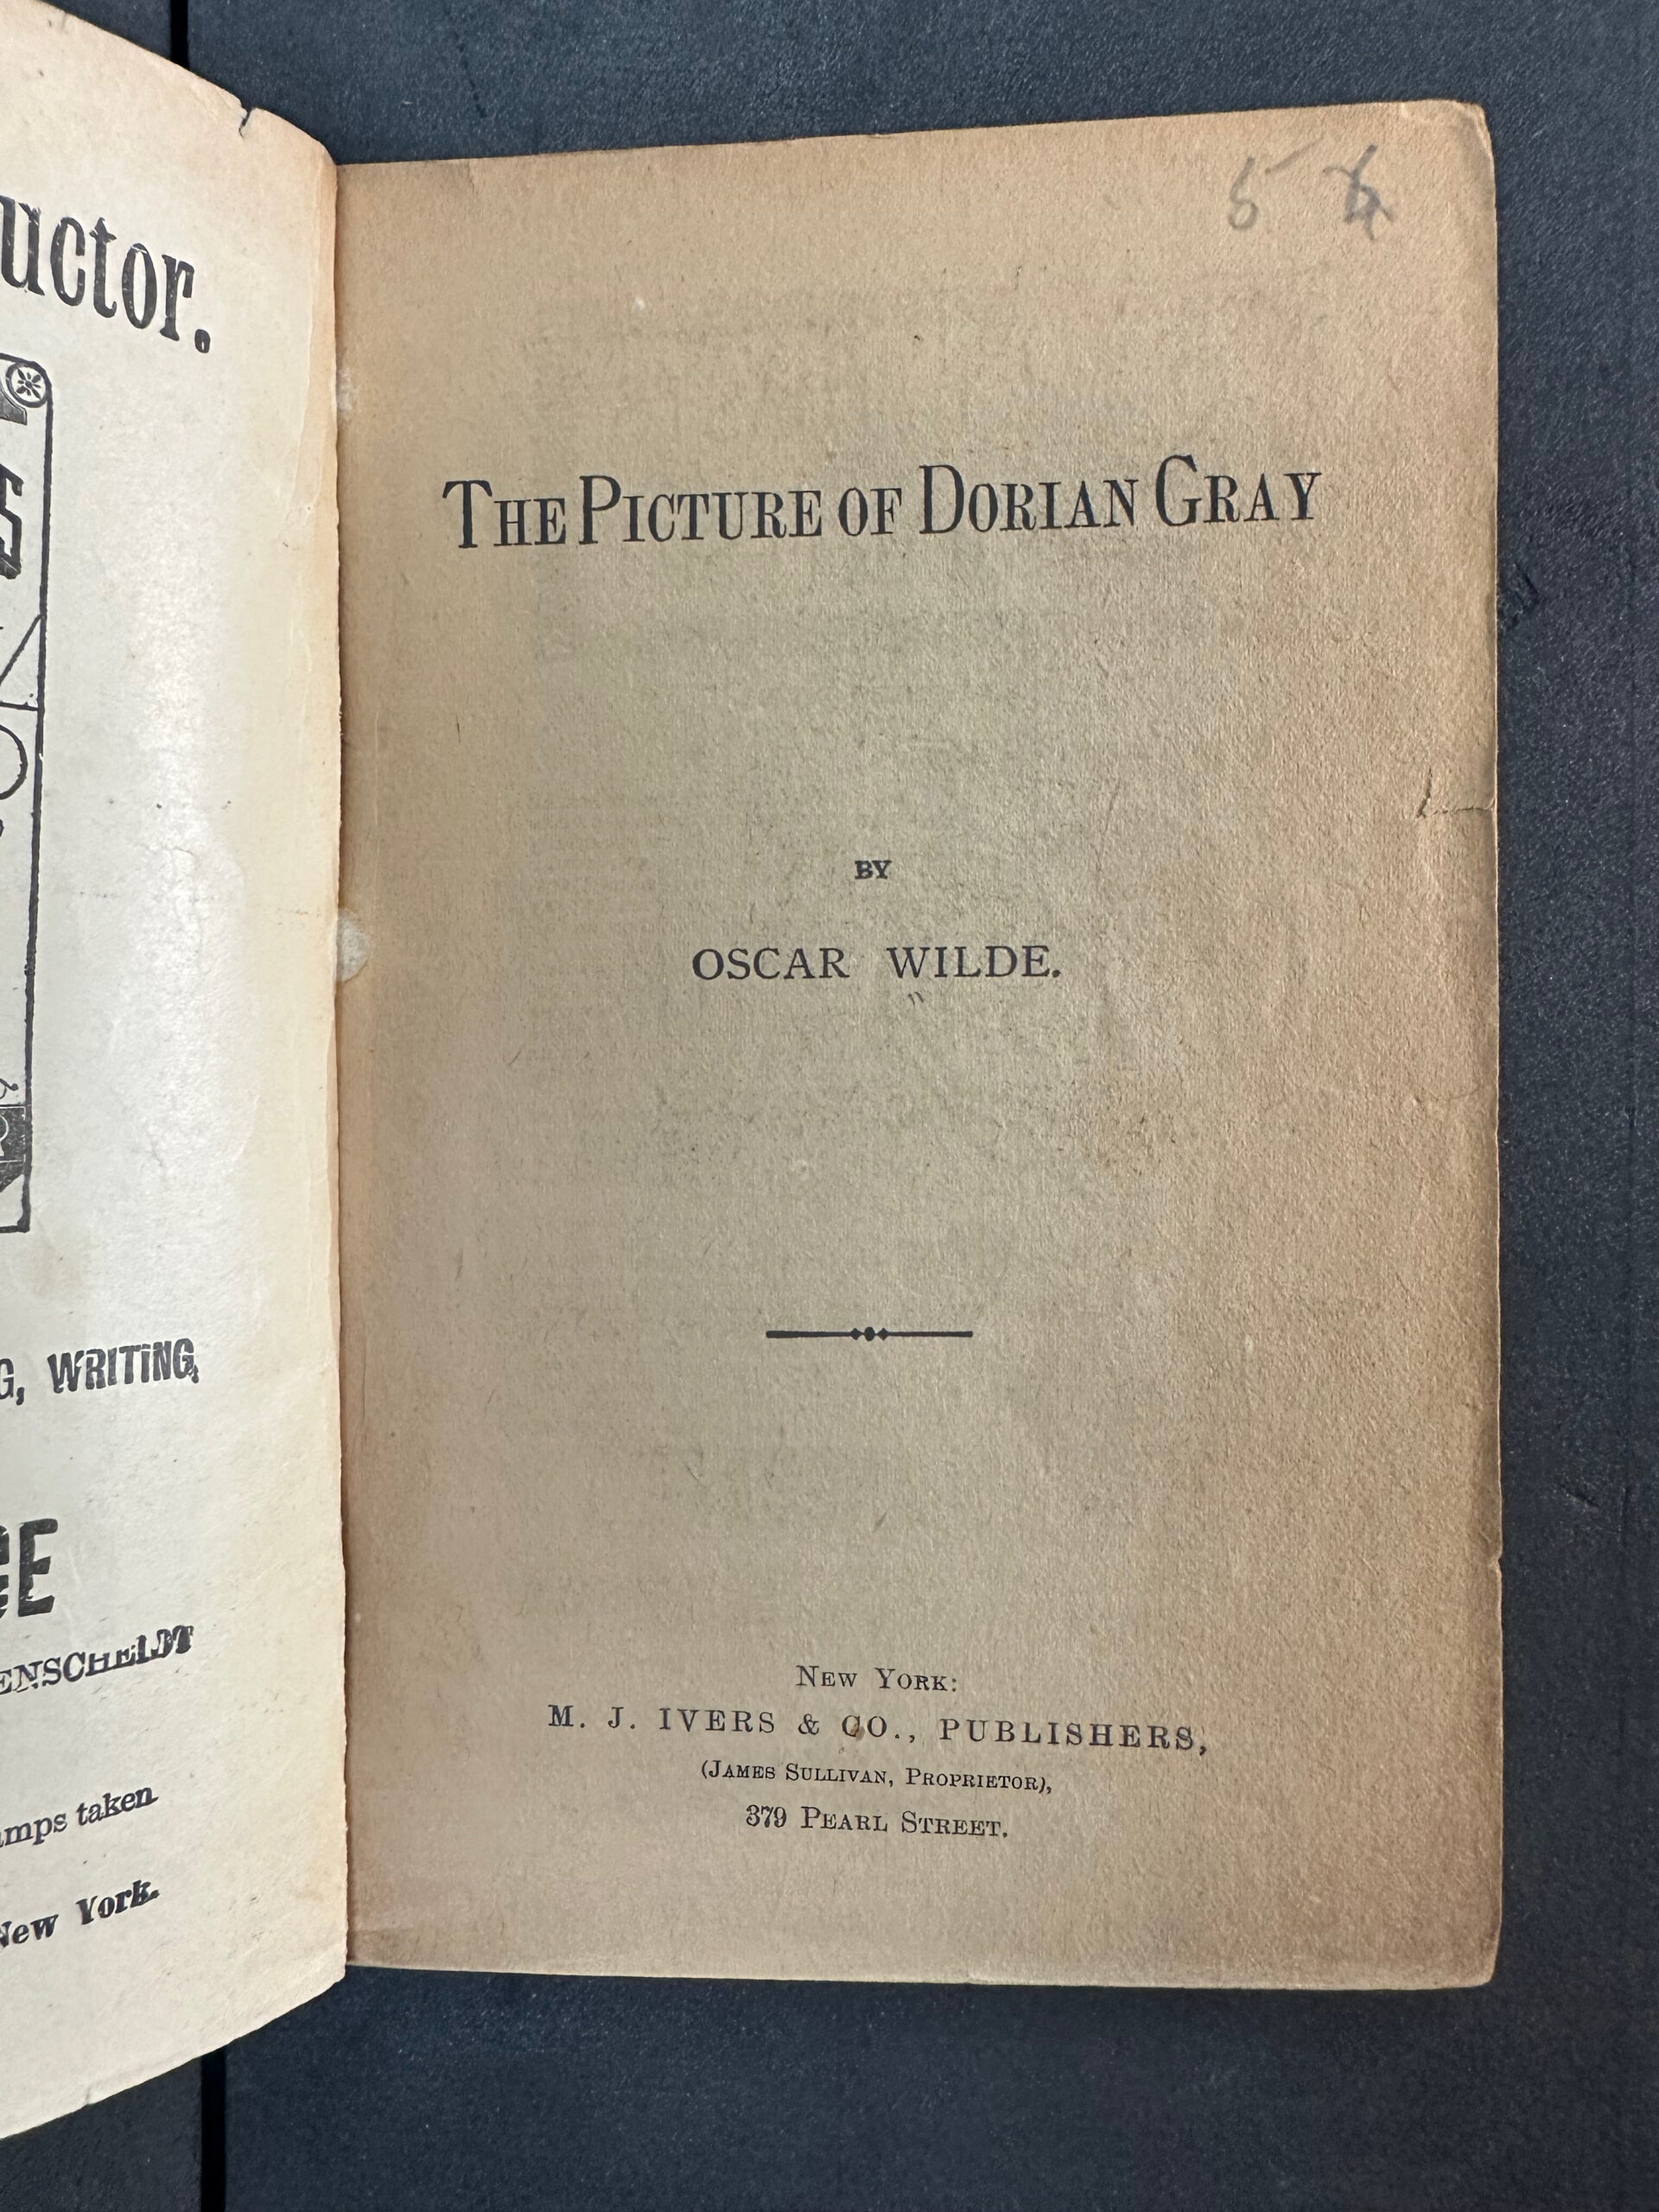 The Picture of Dorian Gray, 1890, PR5819 .P611 1890iv *